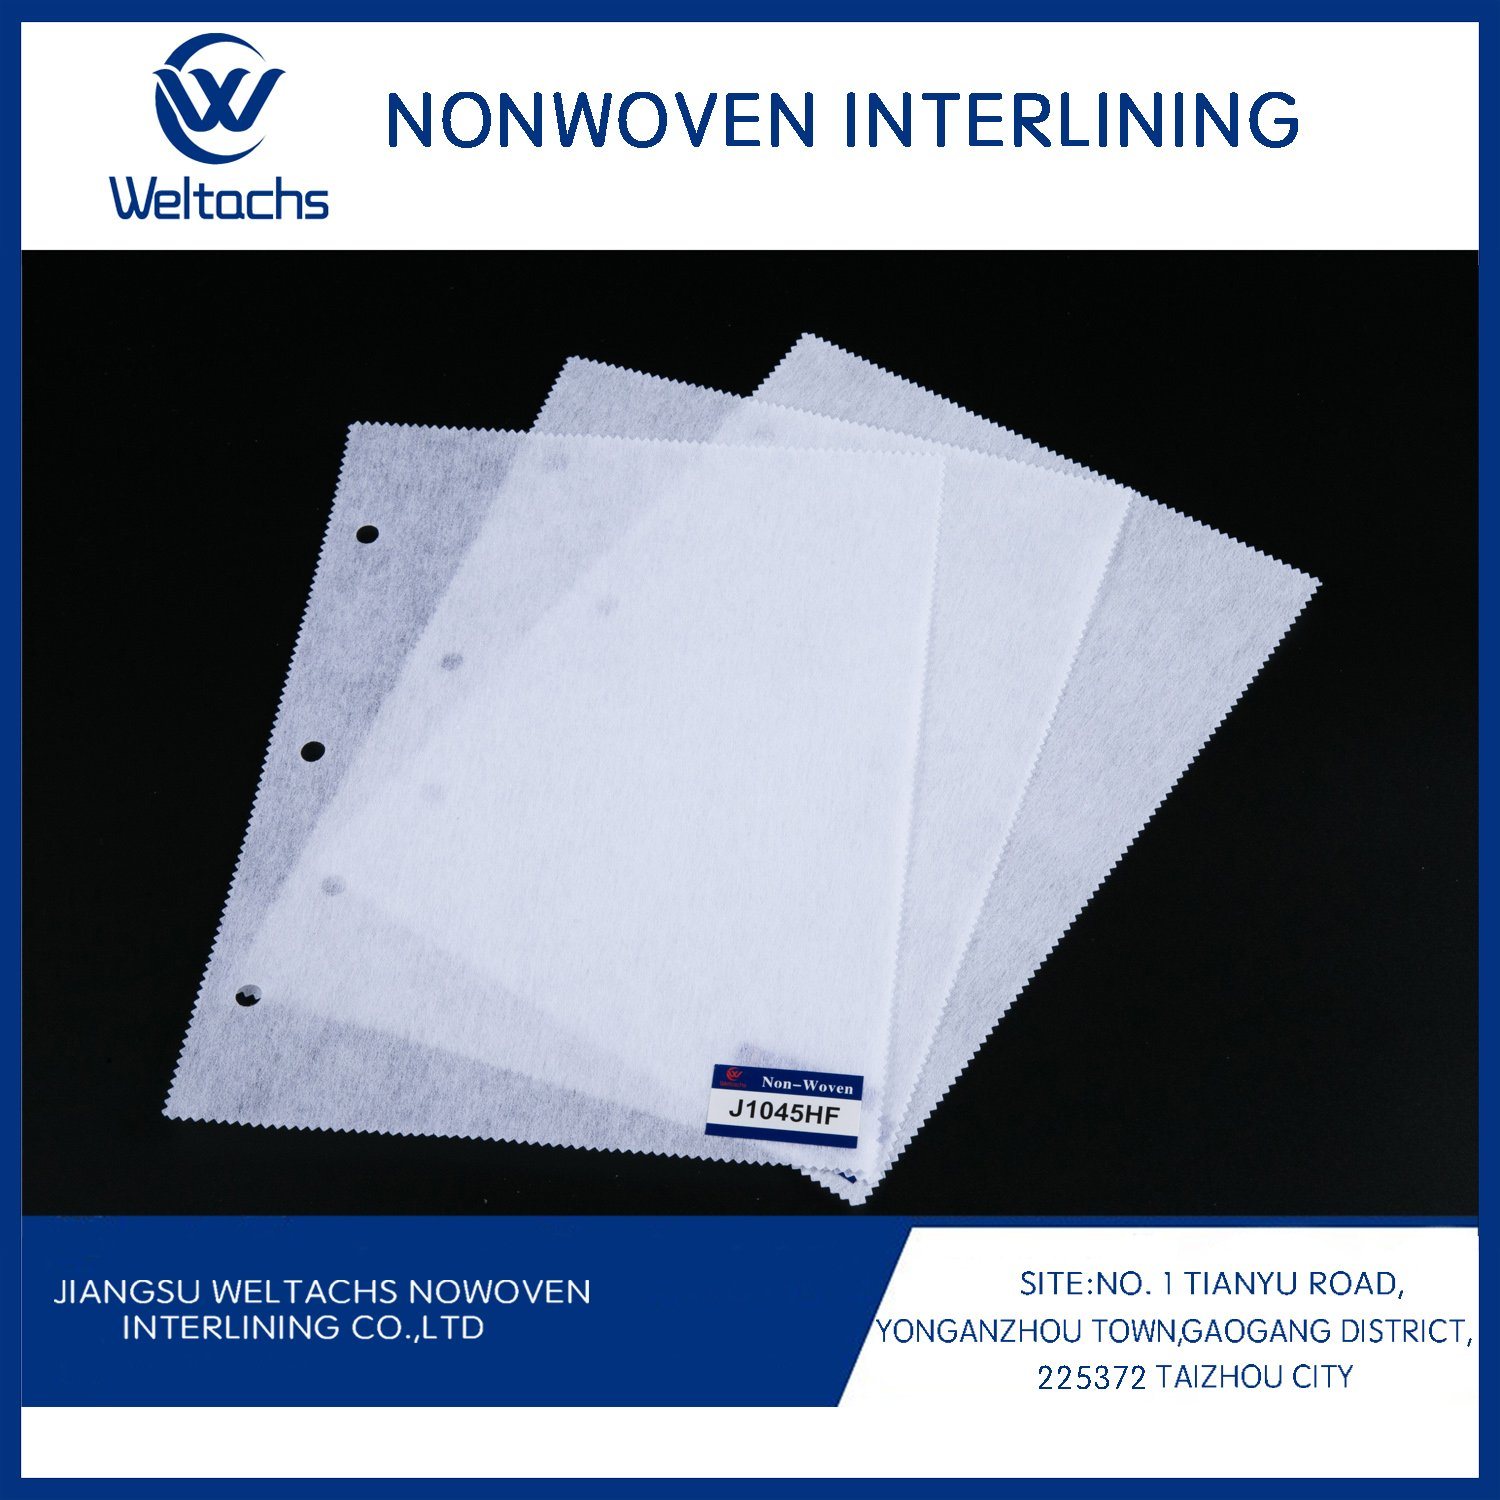 1025hf Non Woven Paper Microdot Fusing Interlining